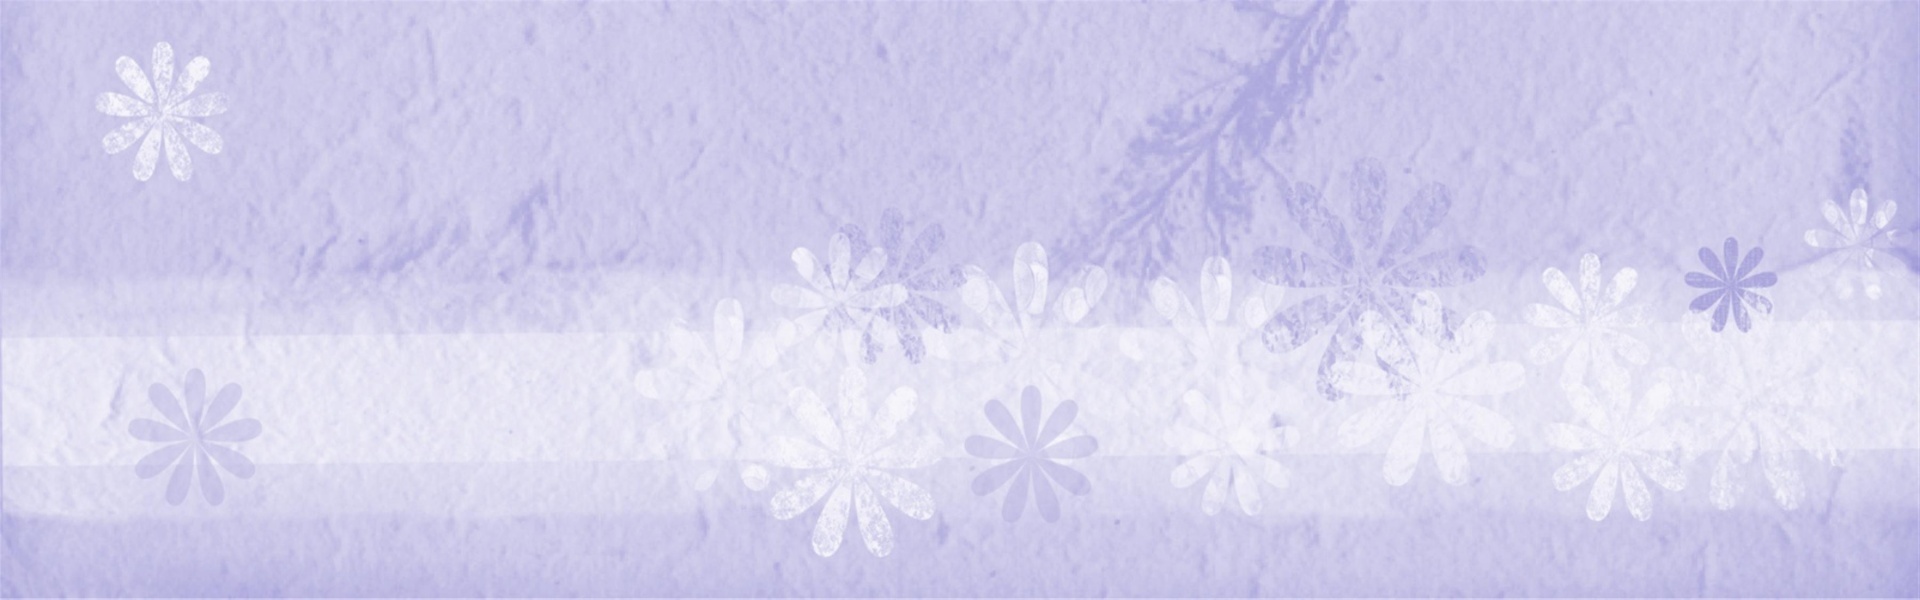 Bandeira do Web Romântico flor lilás